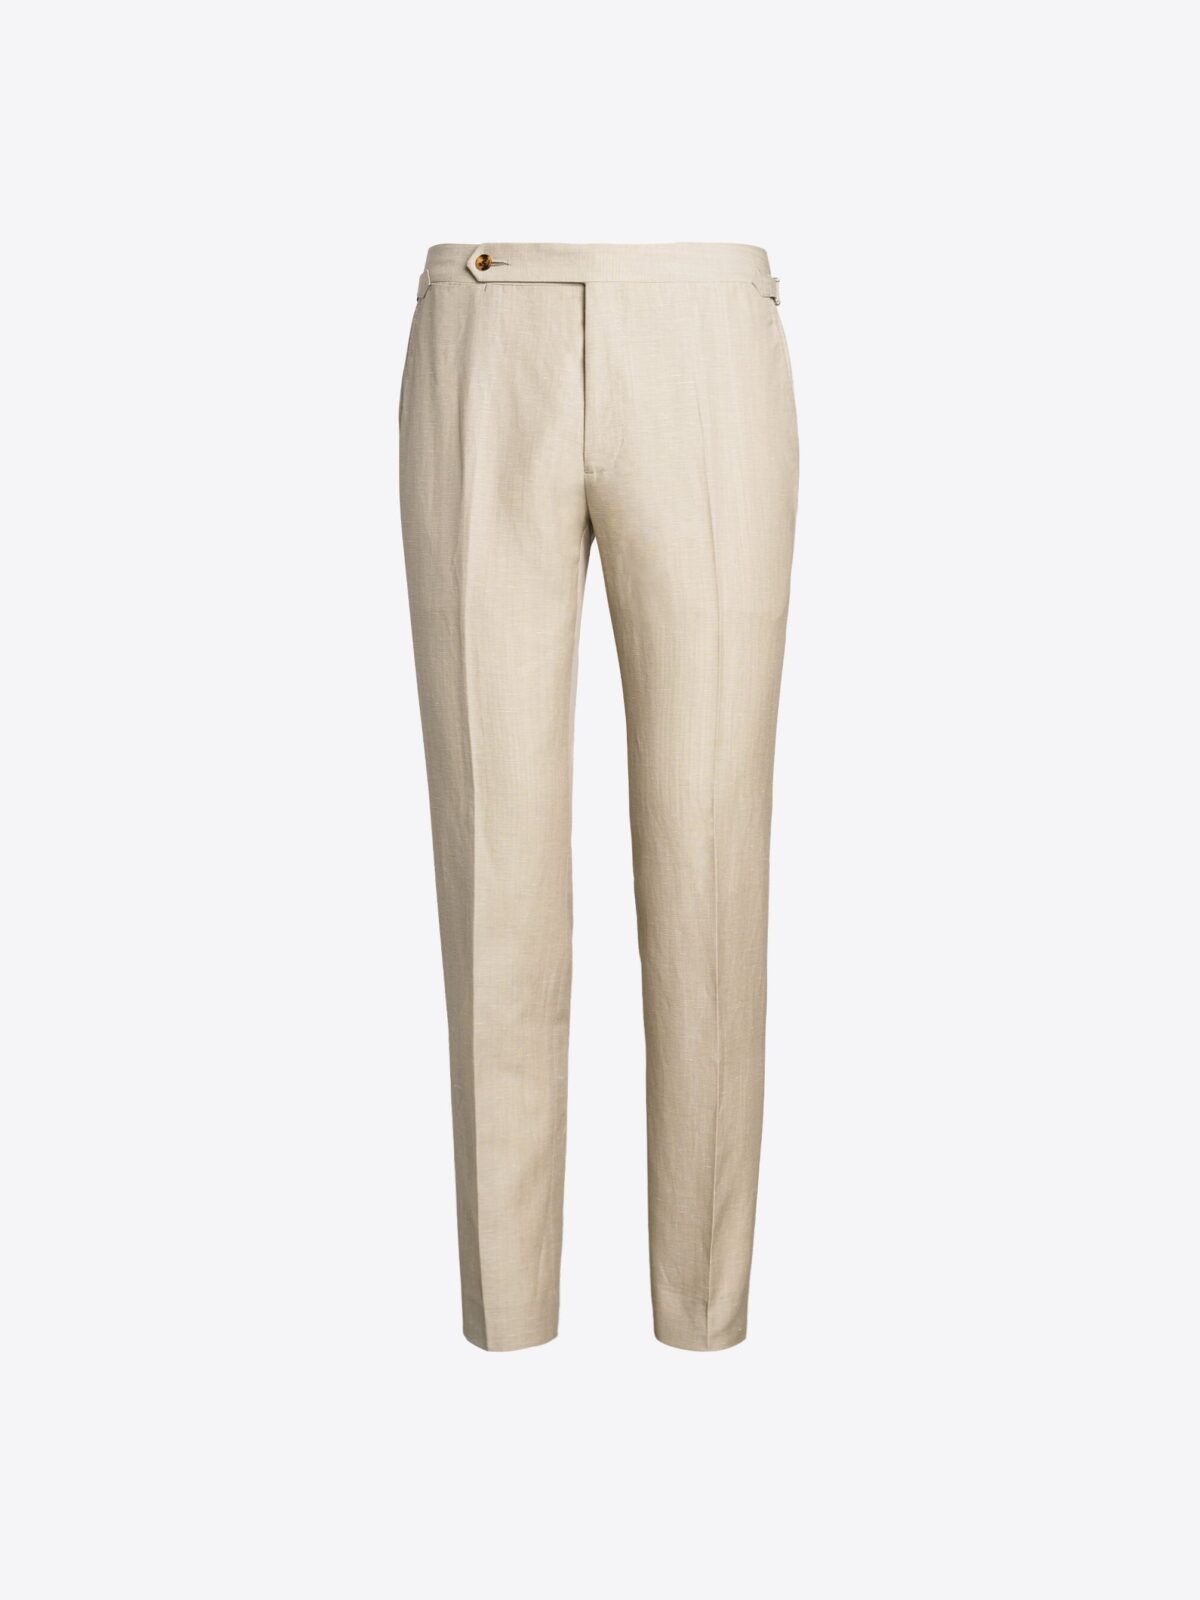 High-rise straight wool pants in beige - Wardrobe NYC